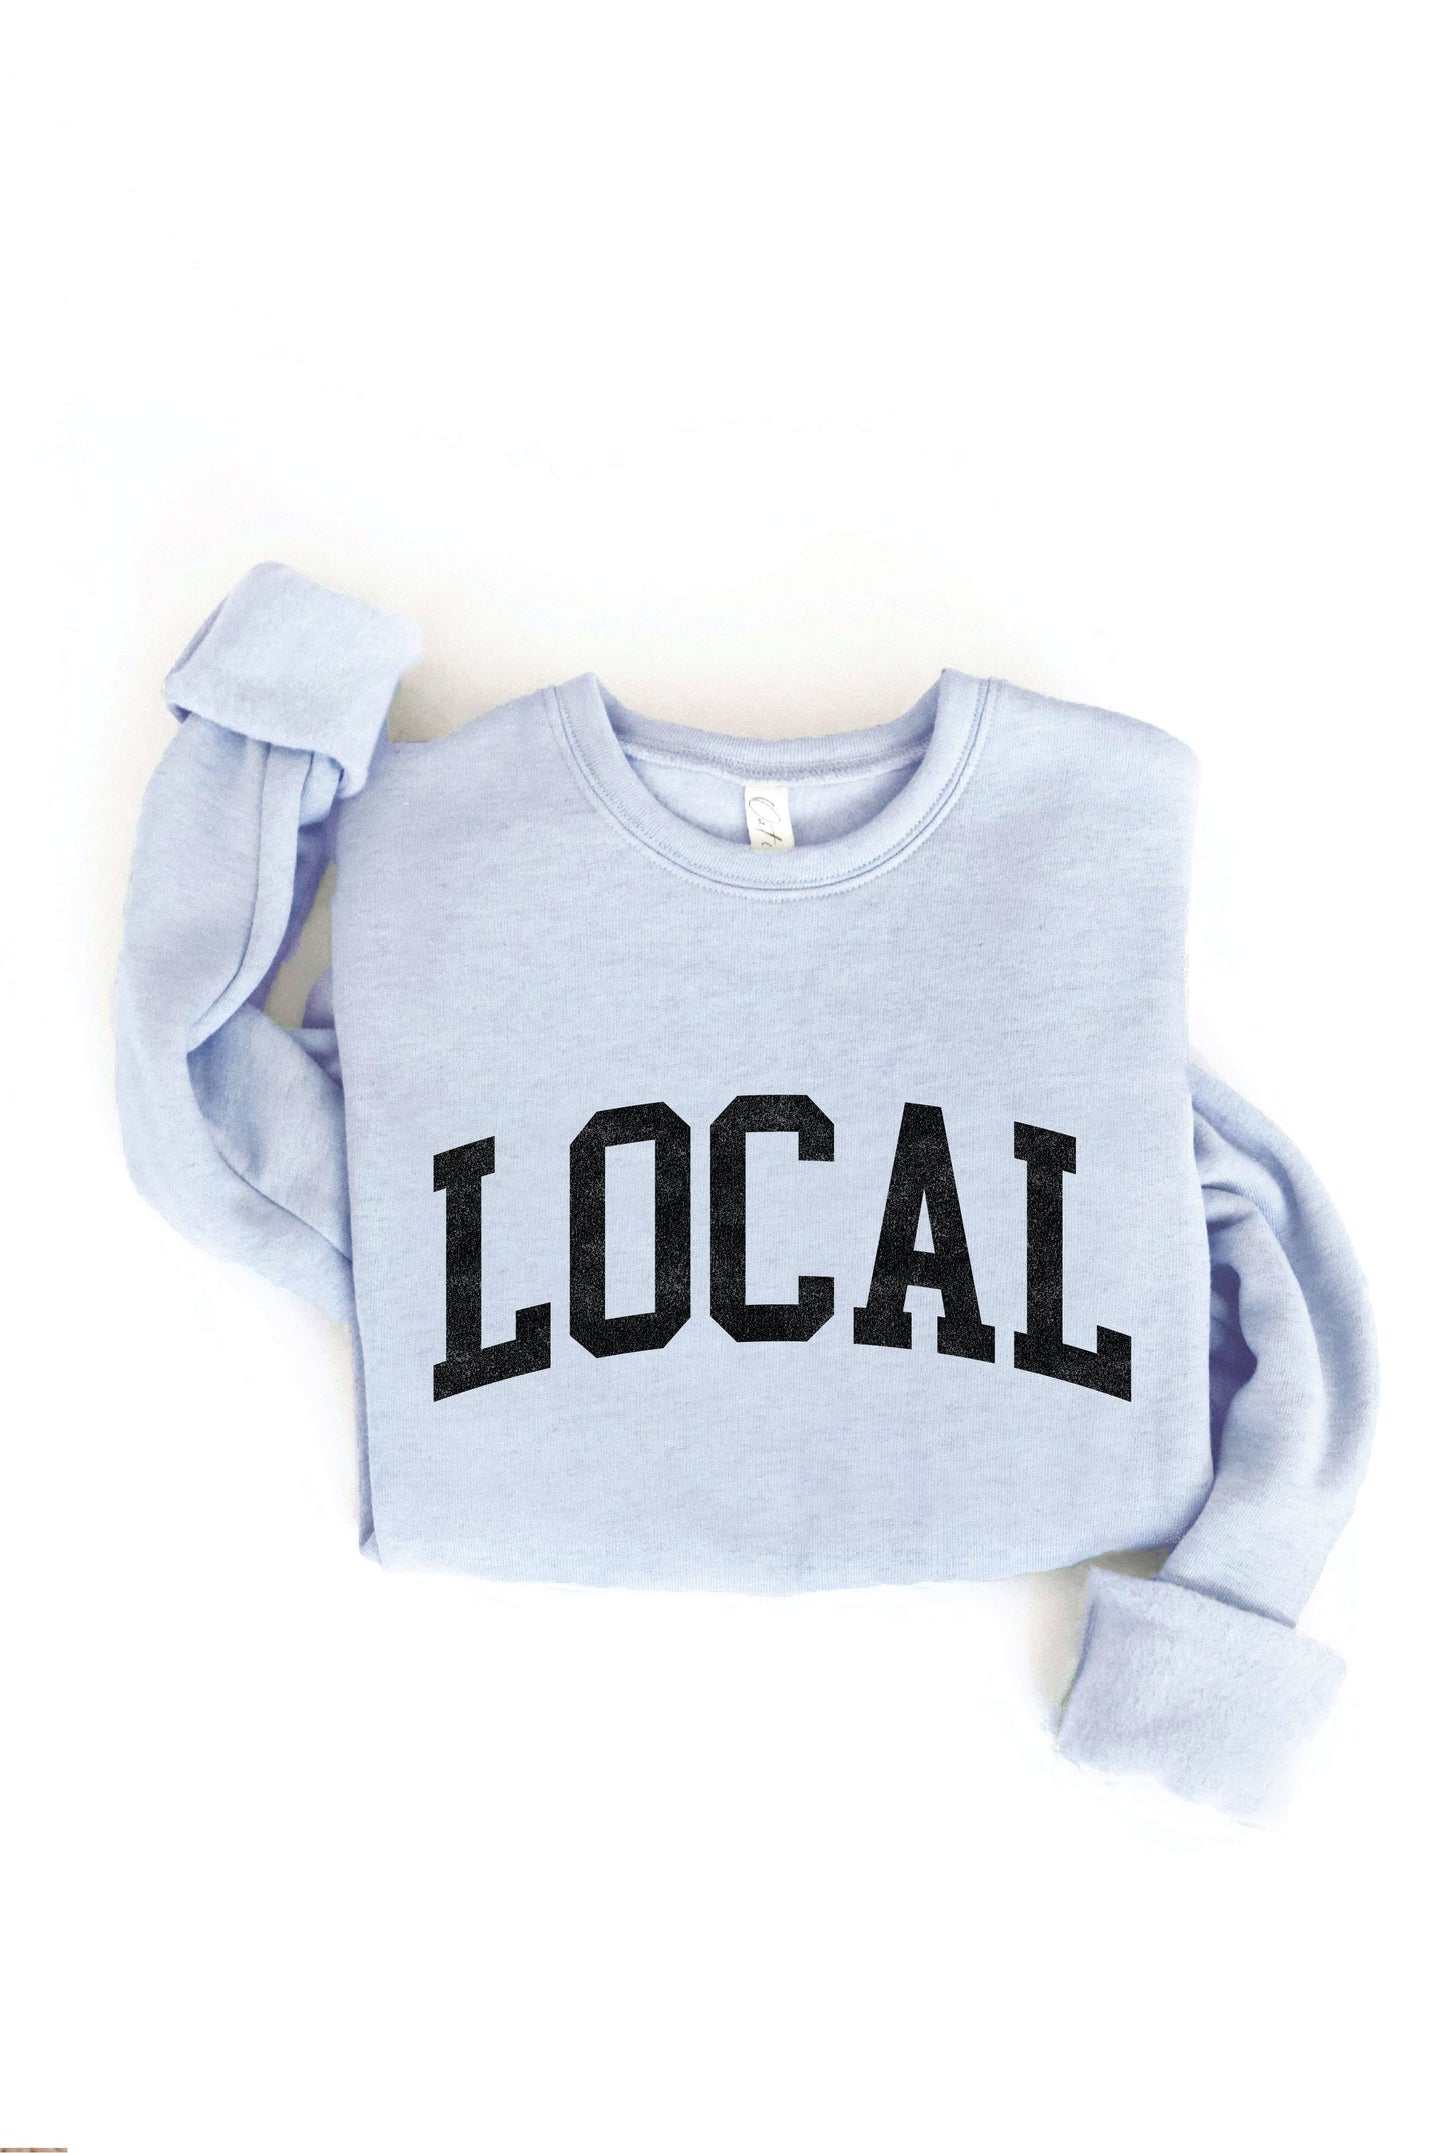 LOCAL graphic sweatshirt: XL / MAROON